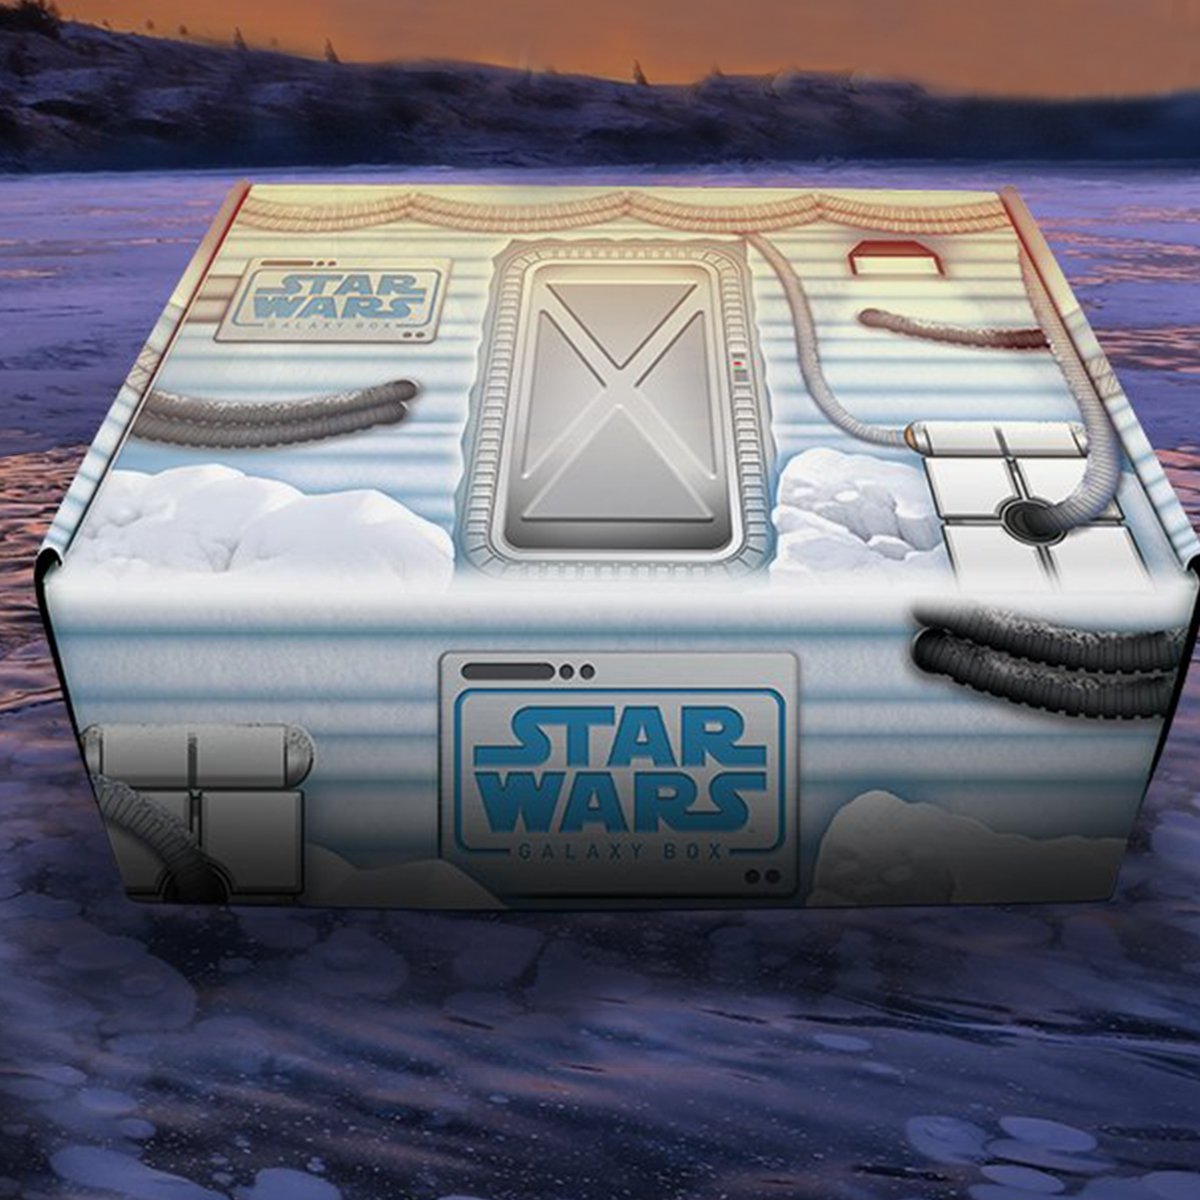 Star Wars Galaxy Box Winter 2021 Spoiler #3